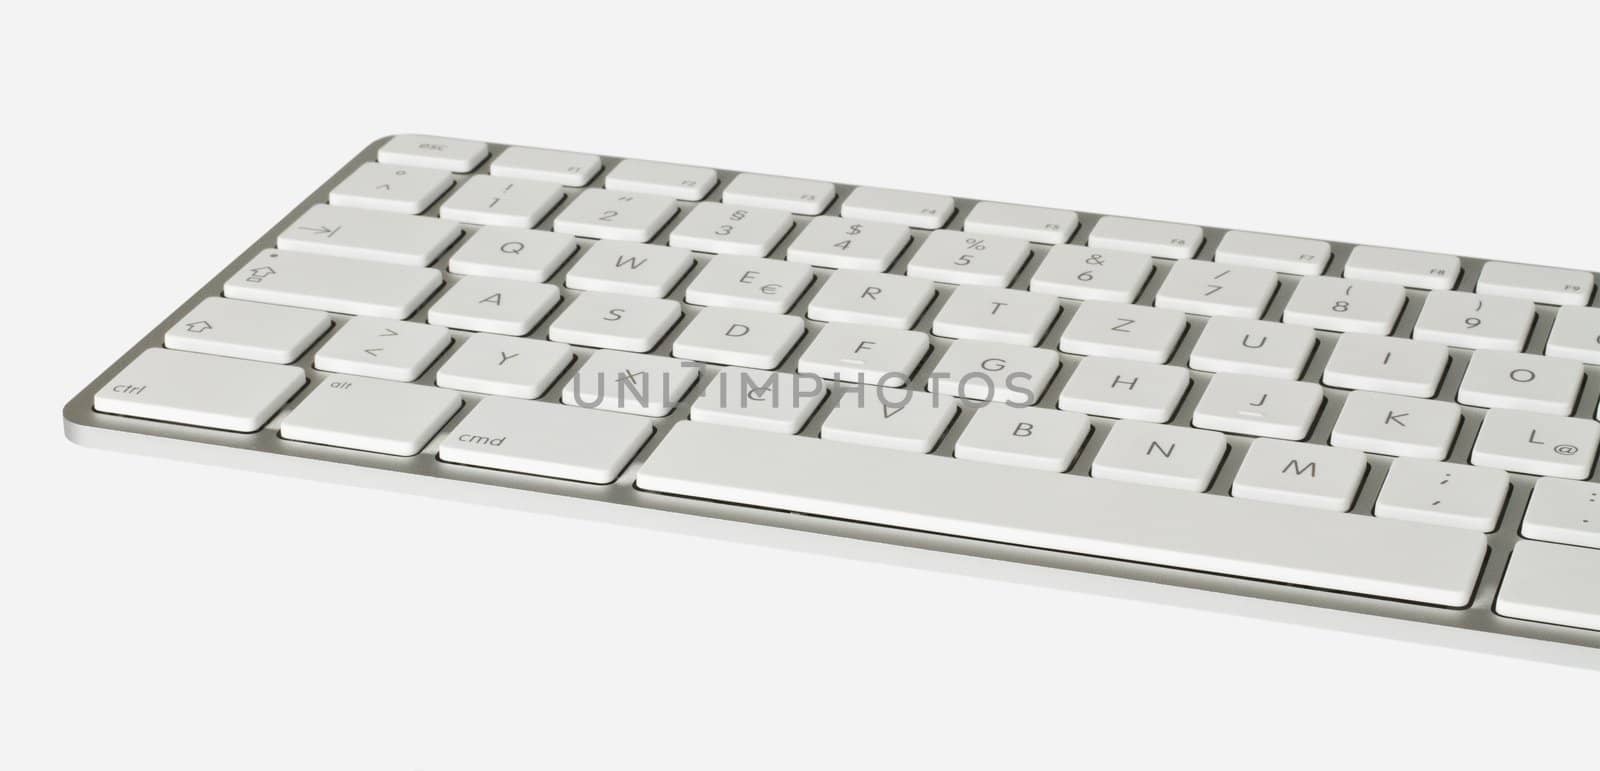 Keyboard in close up by gewoldi